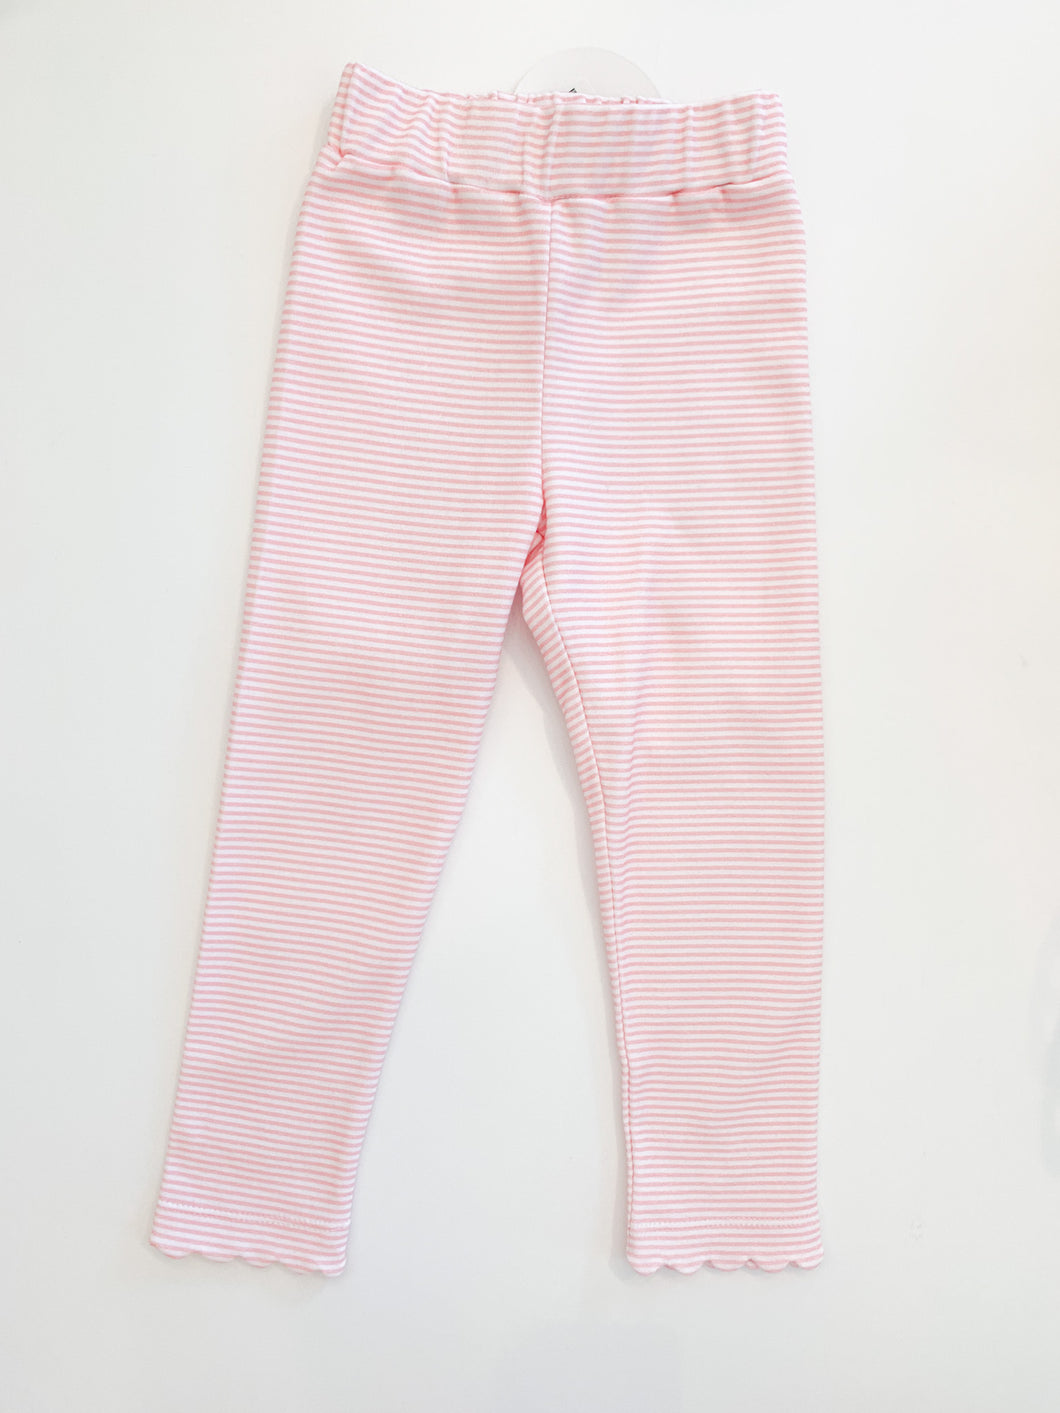 Scallop Legging Candy Stripe Pink